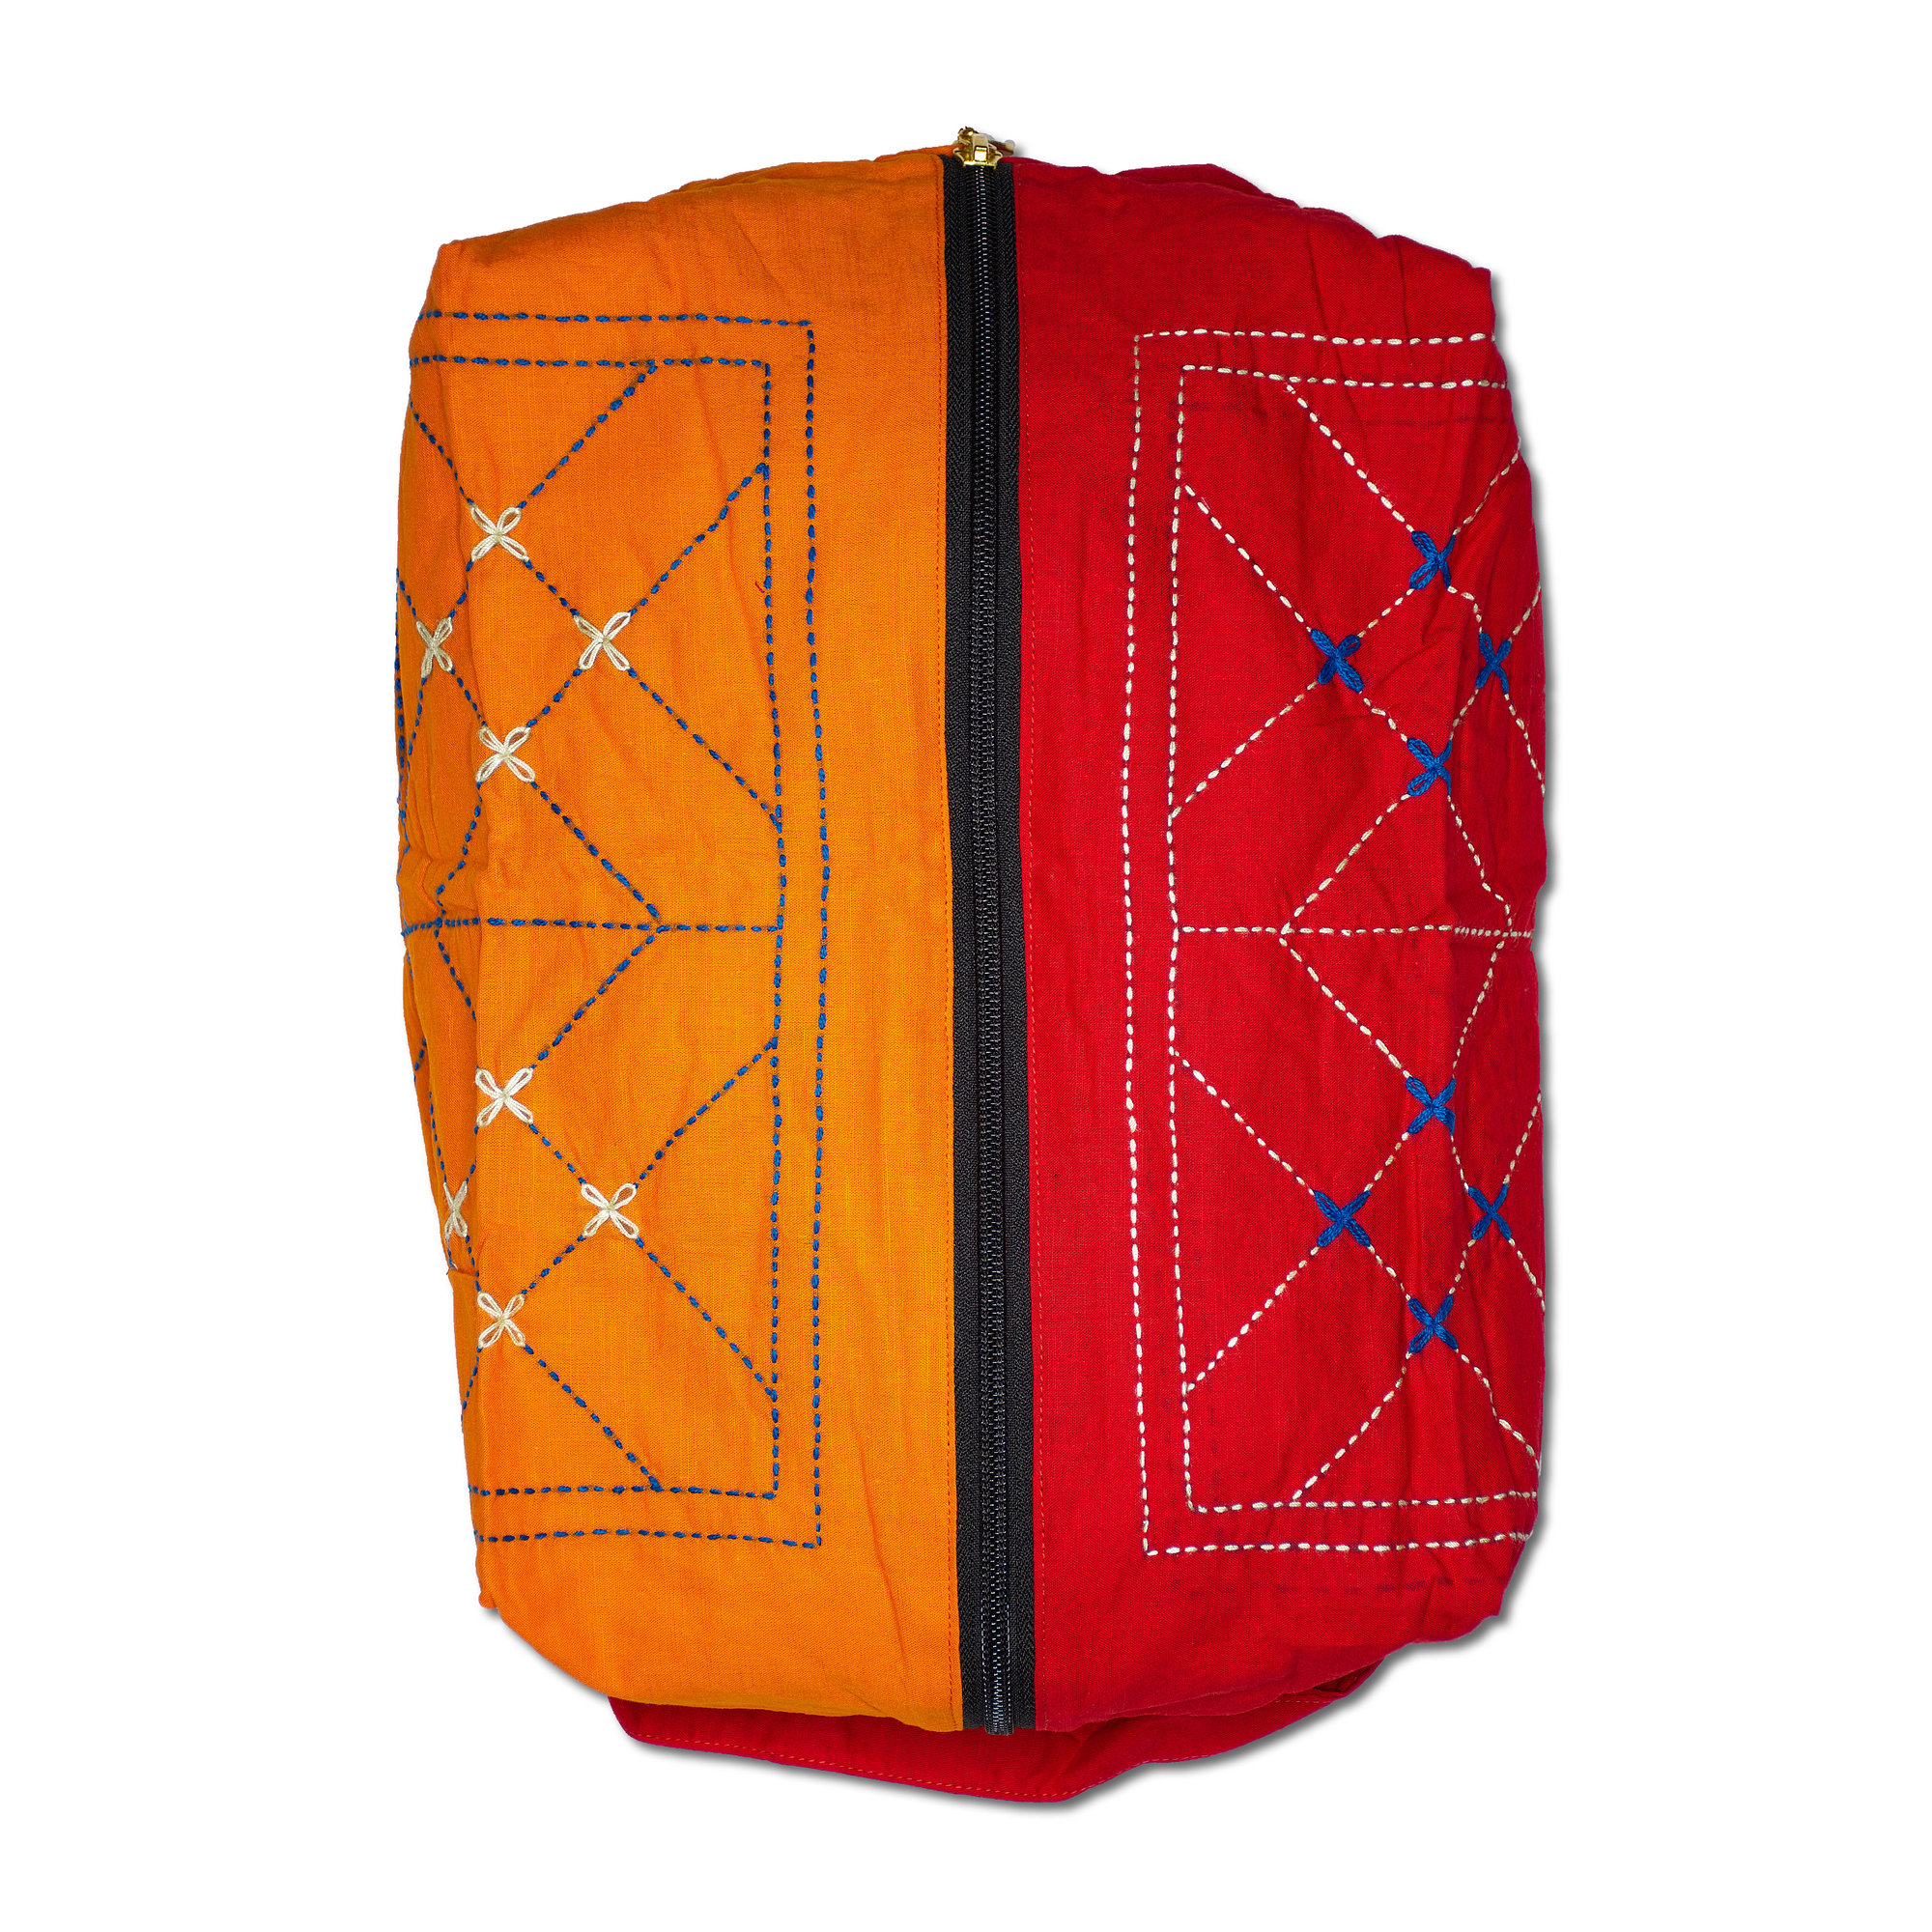 Pouch Bag - Kurigram (geometric) Design In Asif (orange) And Sumi (red)